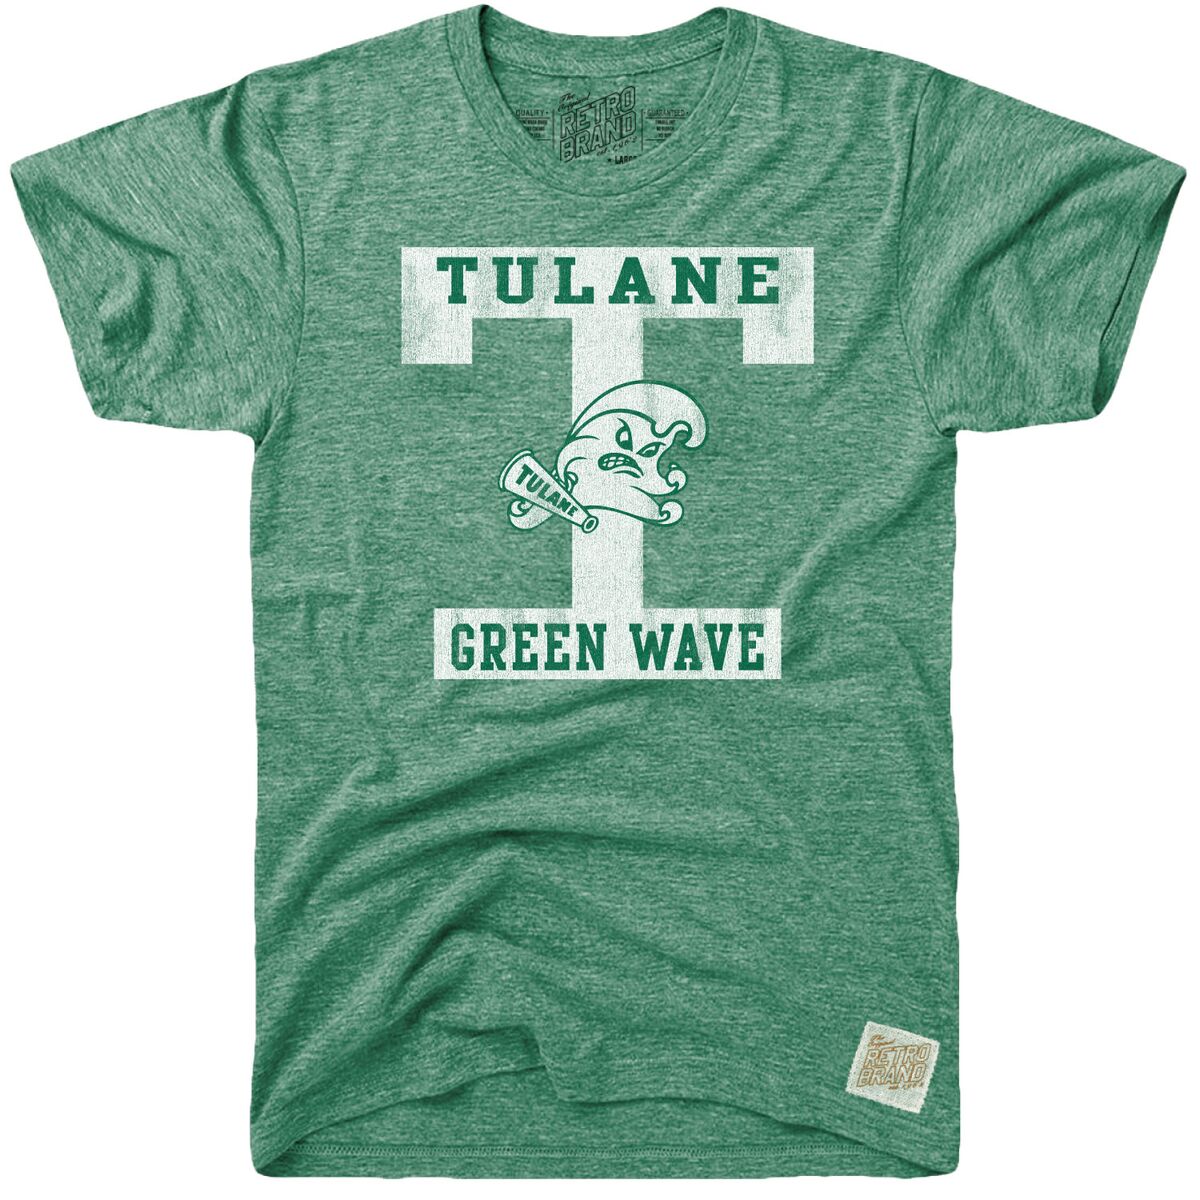 Tulane Green Wave Tri-Blend Unisex Tee